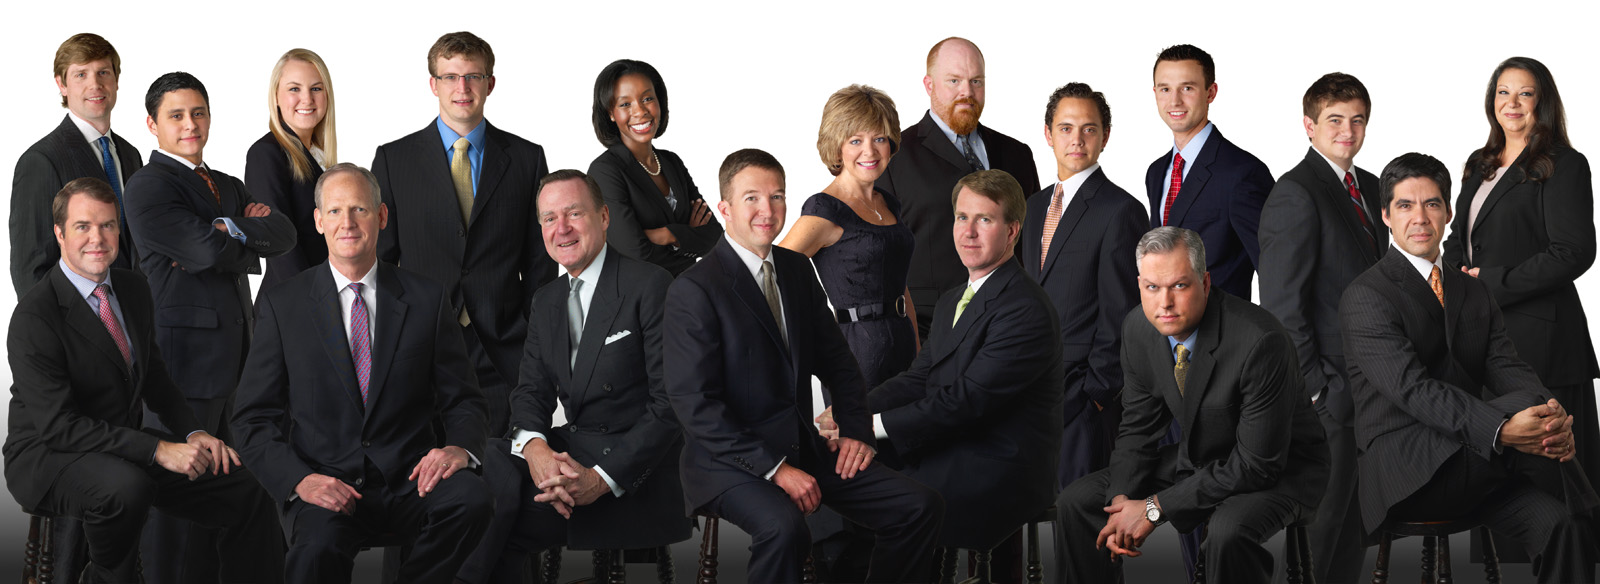 Dallas photography corporate business group portrait